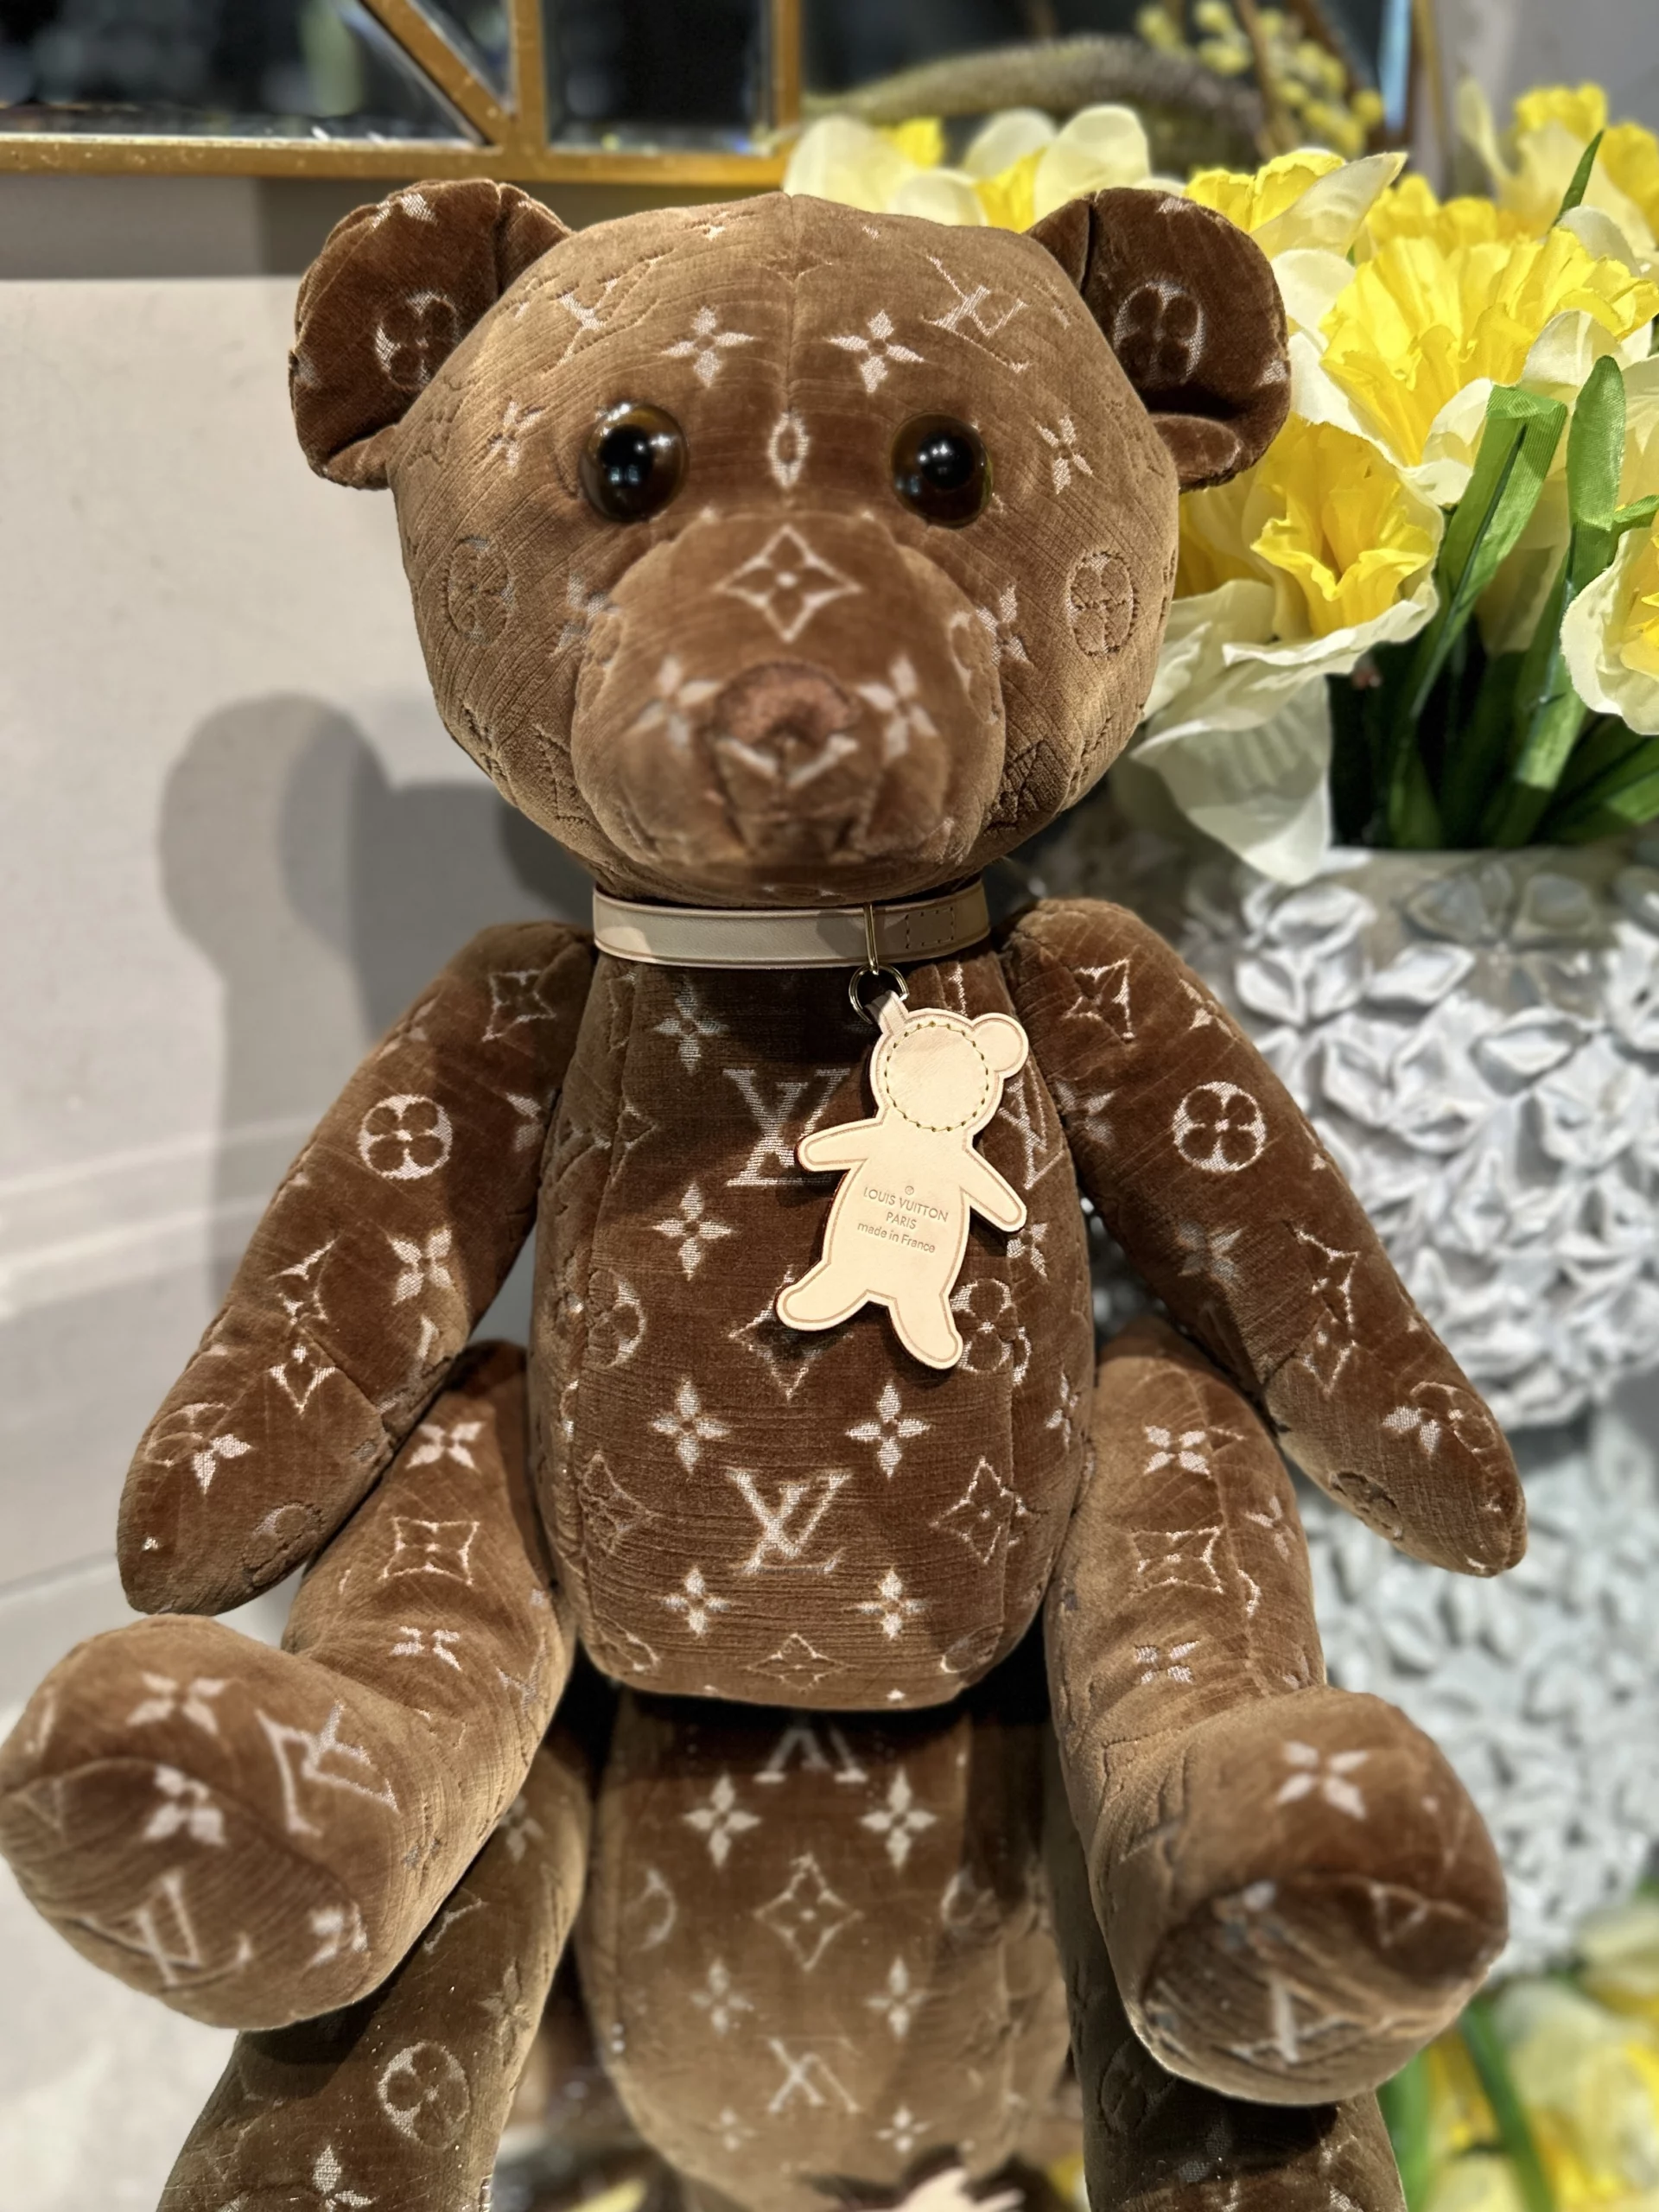 Rare Limited Edition Louis Vuitton doudou Teddy 